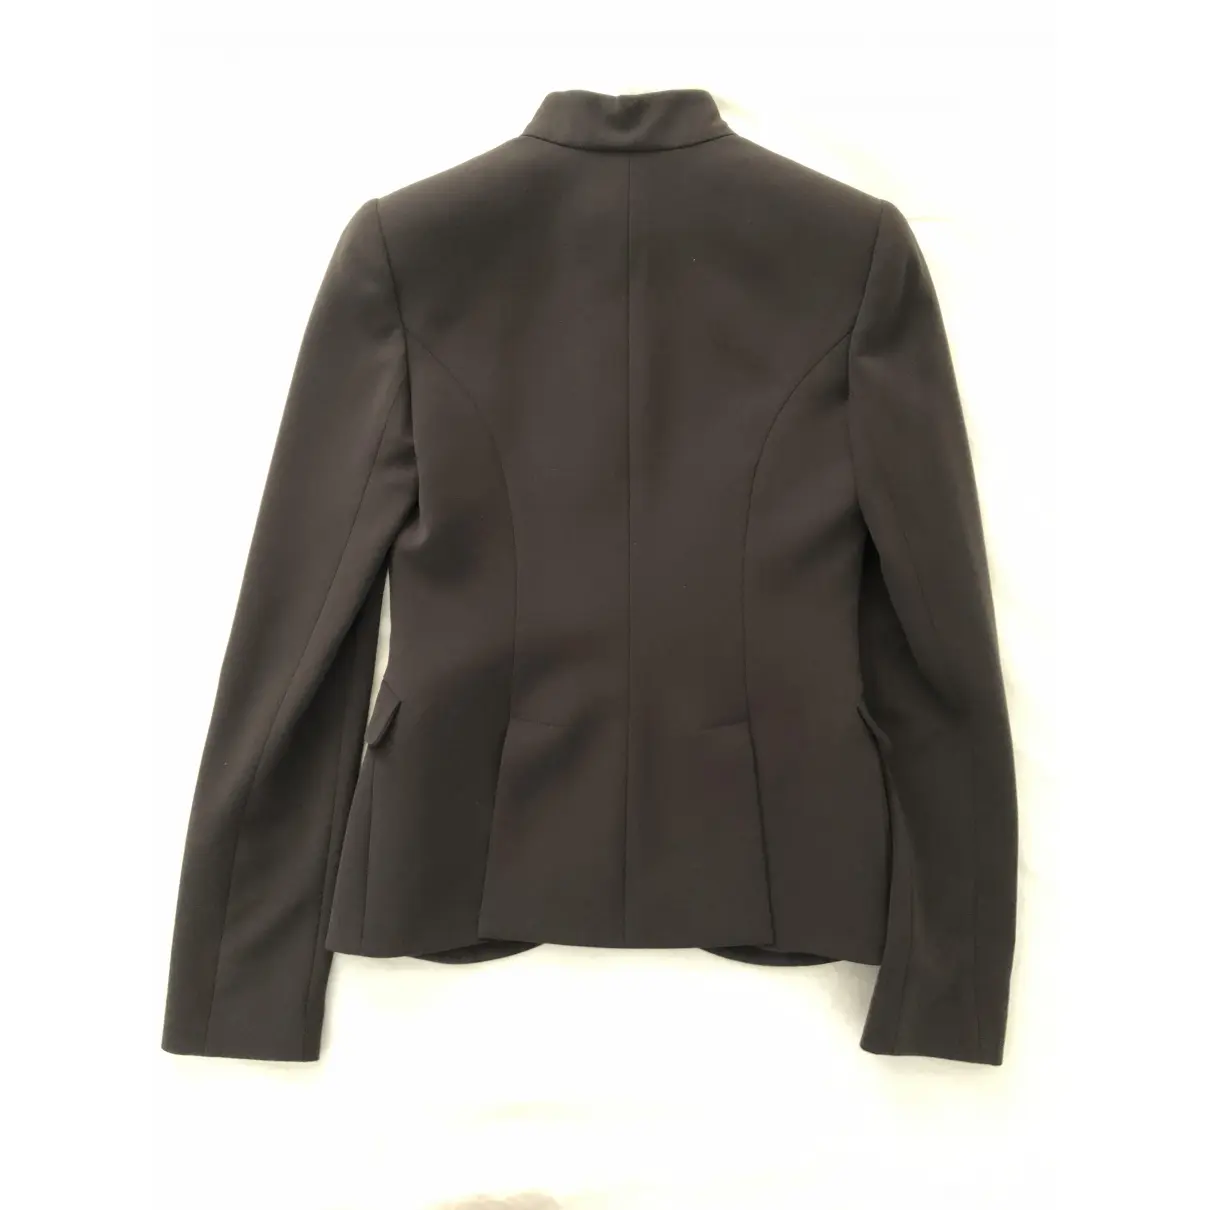 Buy Giorgio Armani Suit jacket online